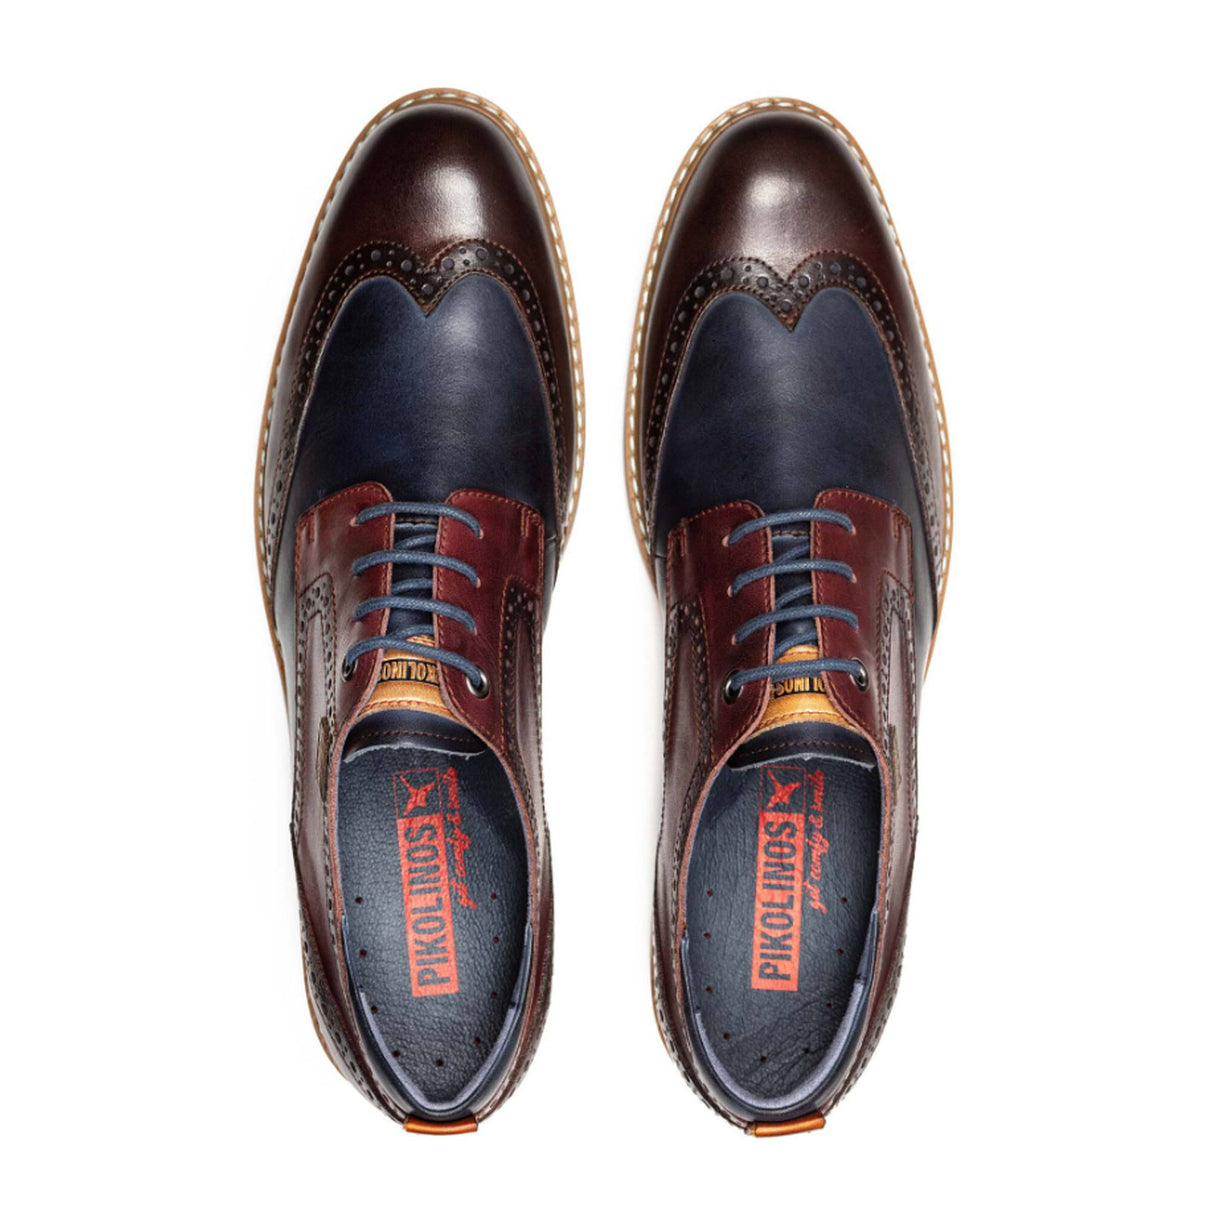 Pikolinos Avila M1T-4191C1 Oxford (Men) - Olmo Dress-Casual - Oxfords - The Heel Shoe Fitters